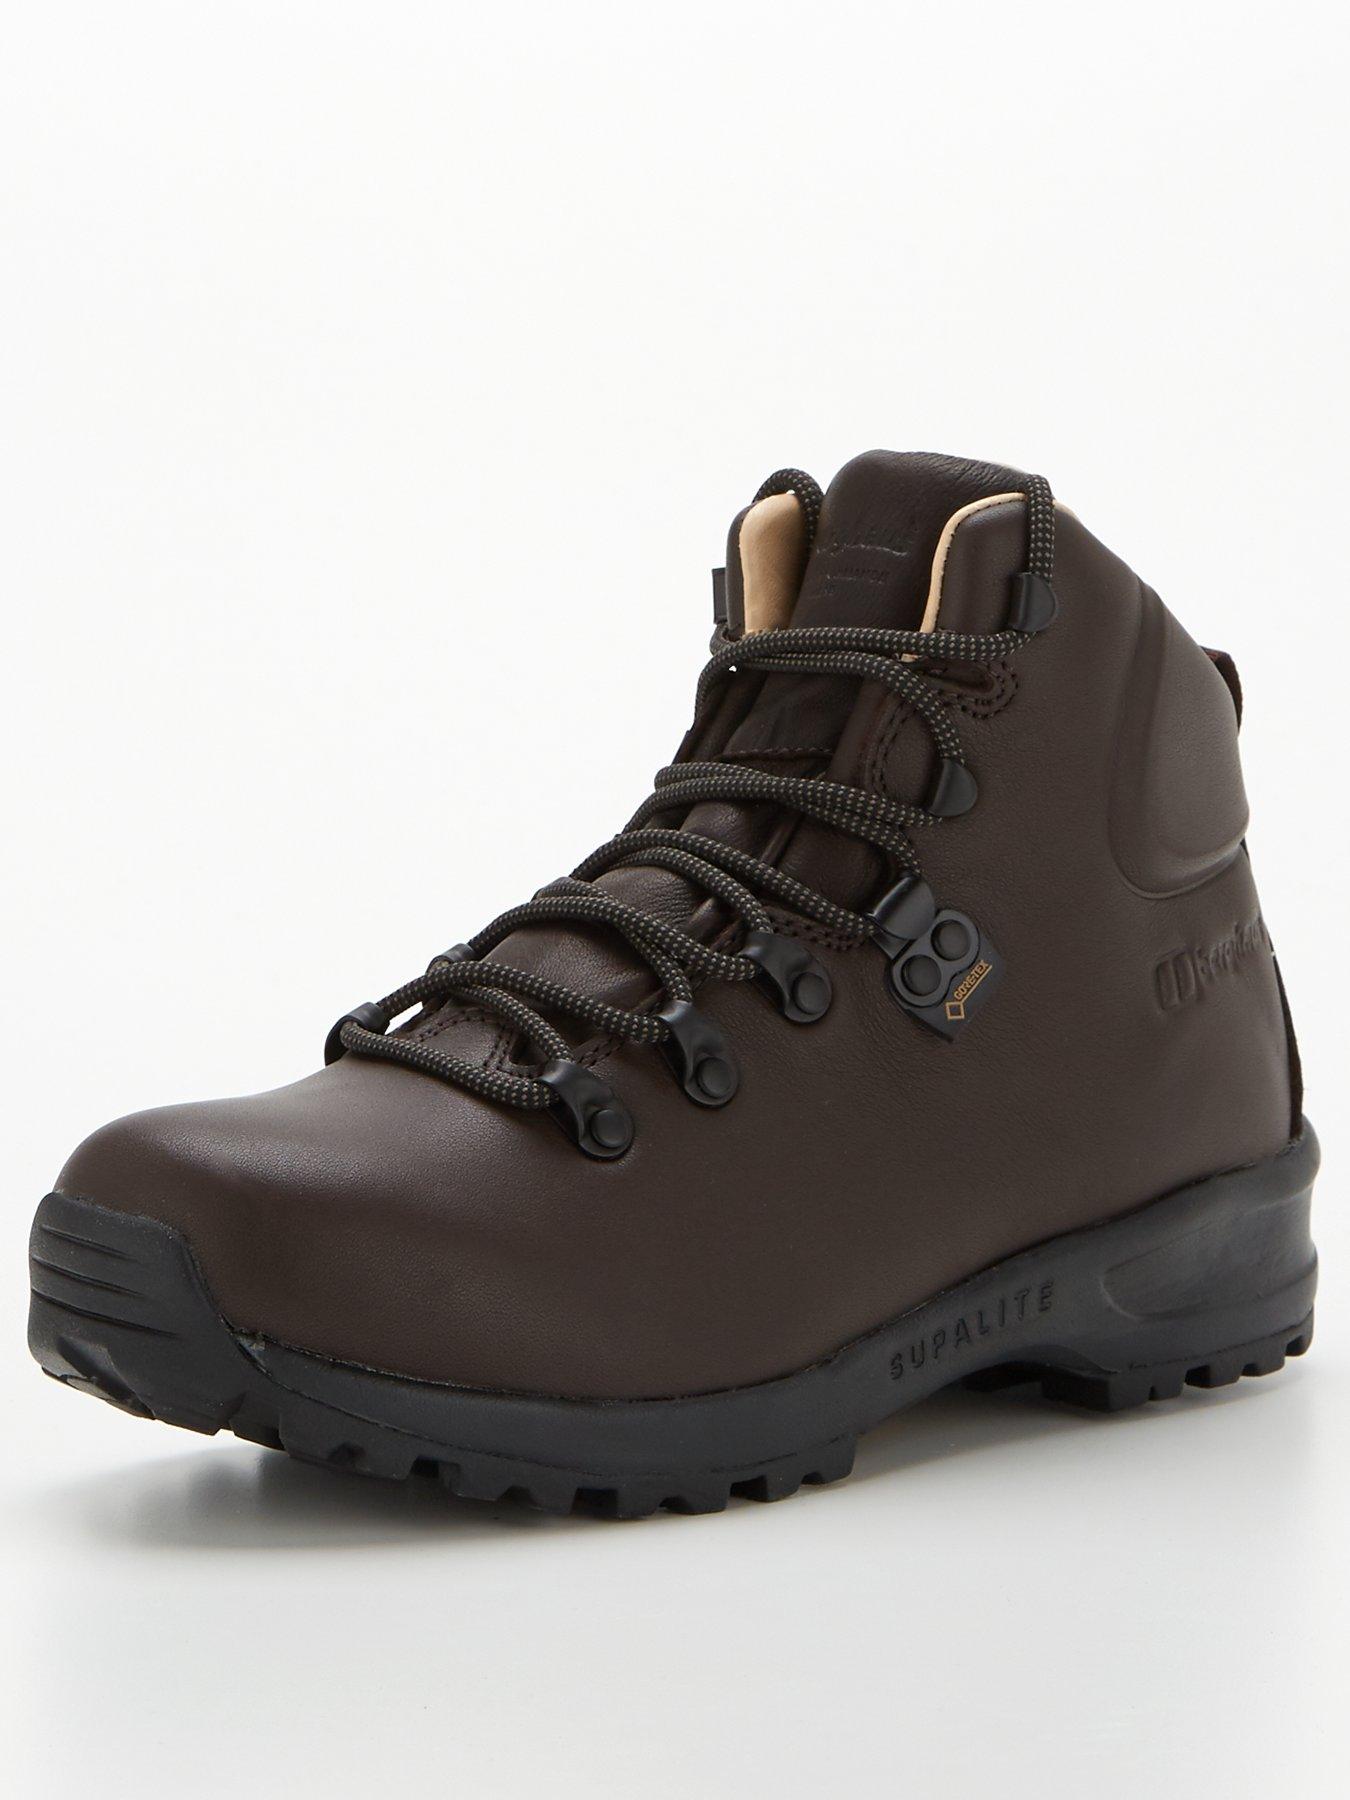 brasher Berghaus Supalite II GTX Womens Ladies Brown Waterproof Walking Boots Size 4-8 